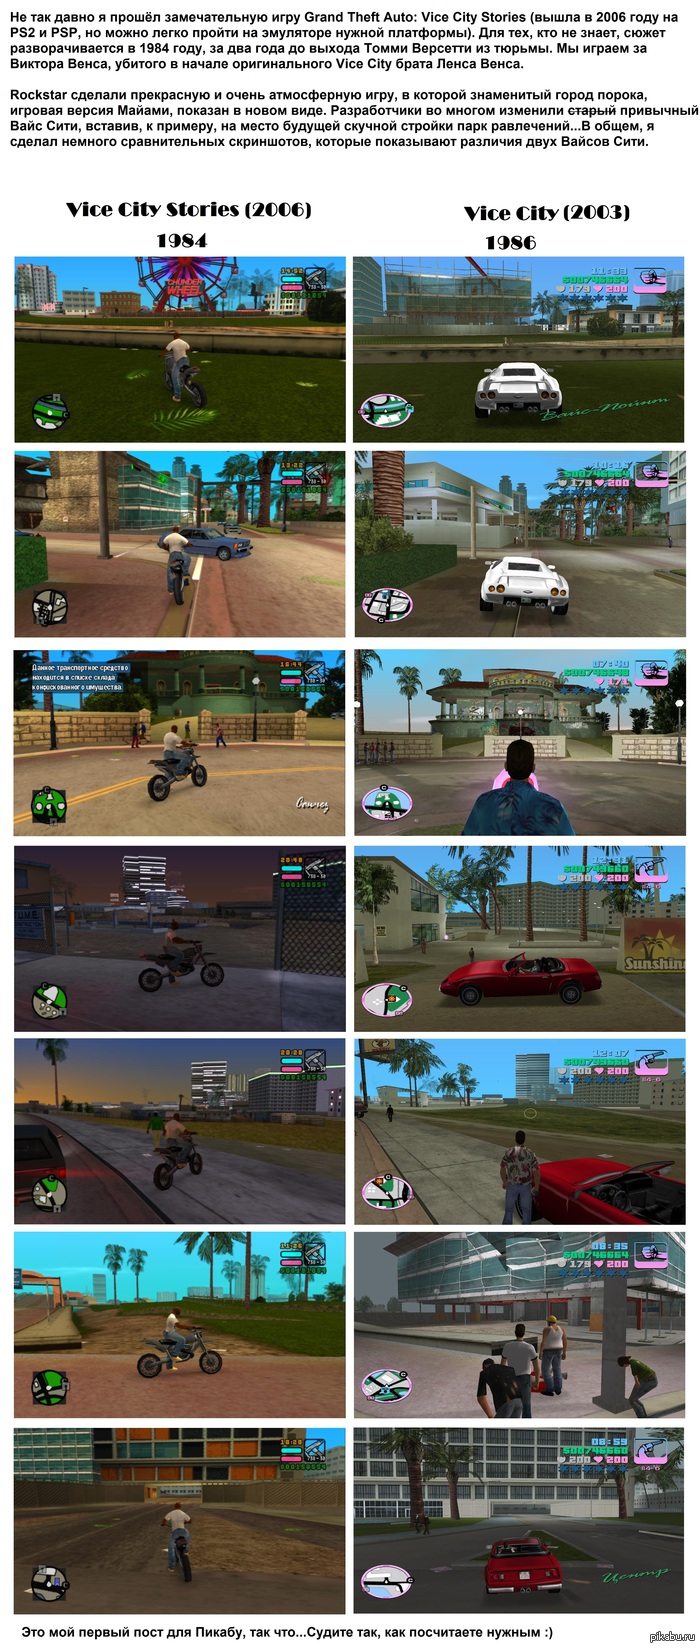 Grand Theft Auto: Vice City vs. Vice City Stories 